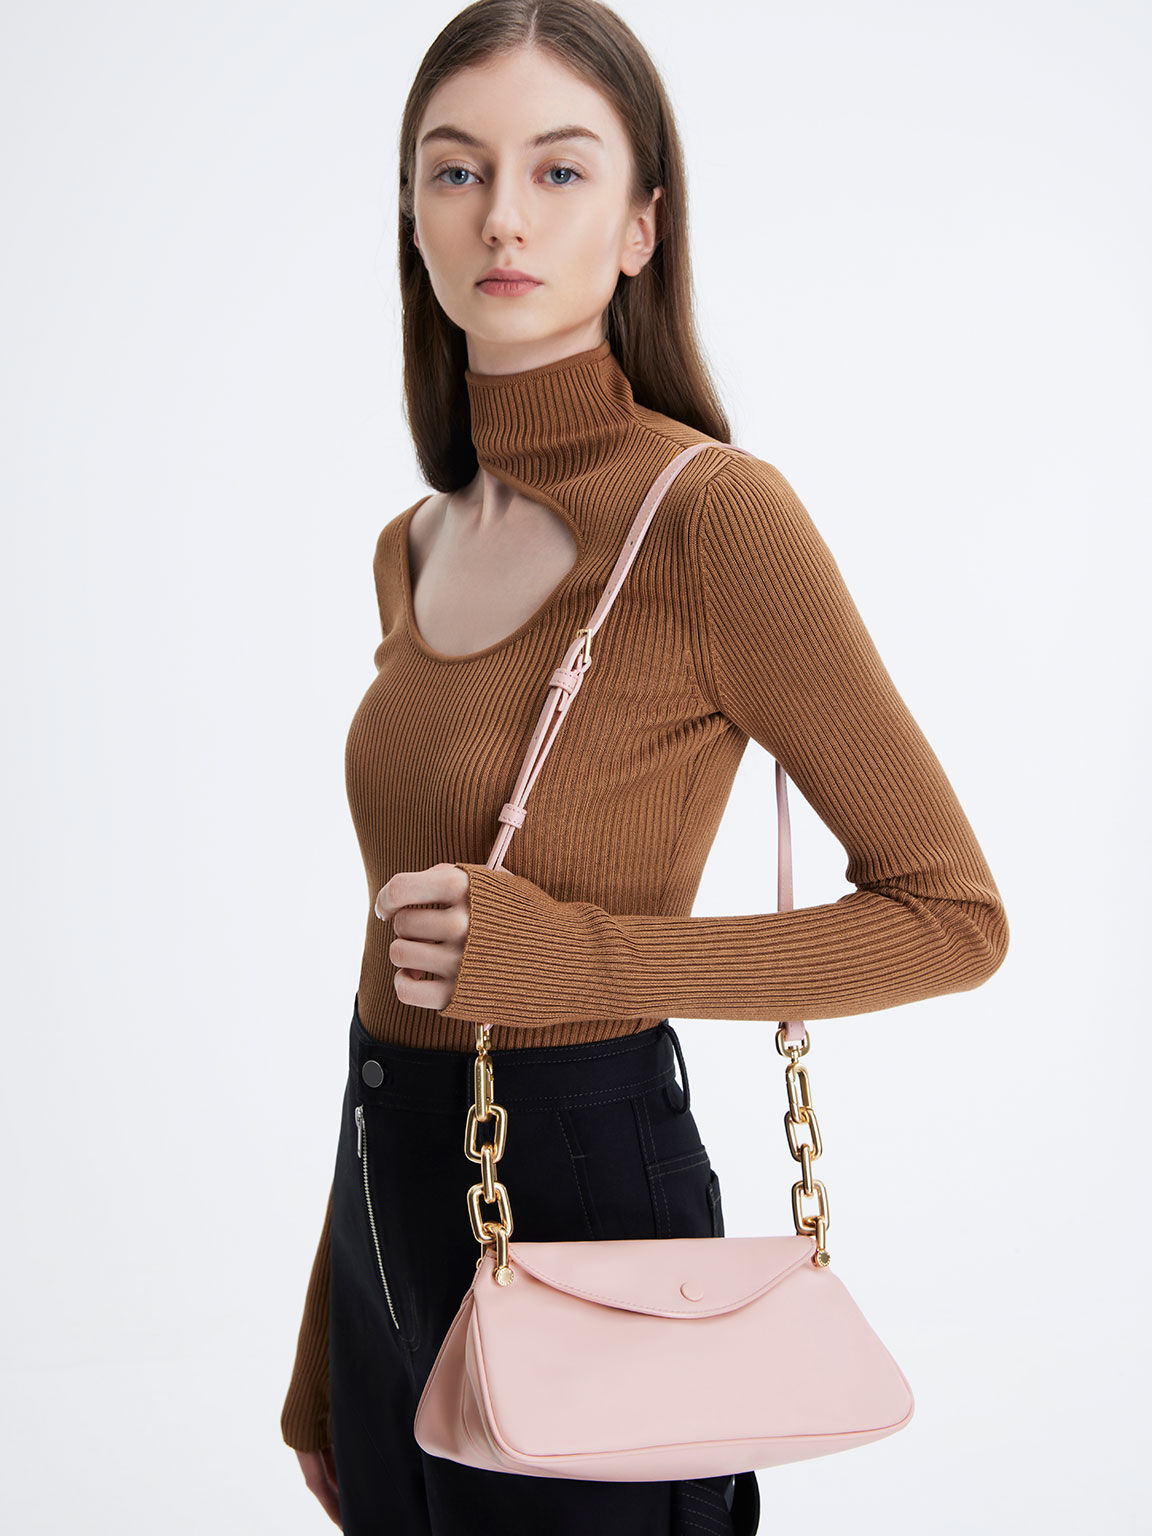 Cleona Braided Handle Hobo Bag, Light Pink, hi-res